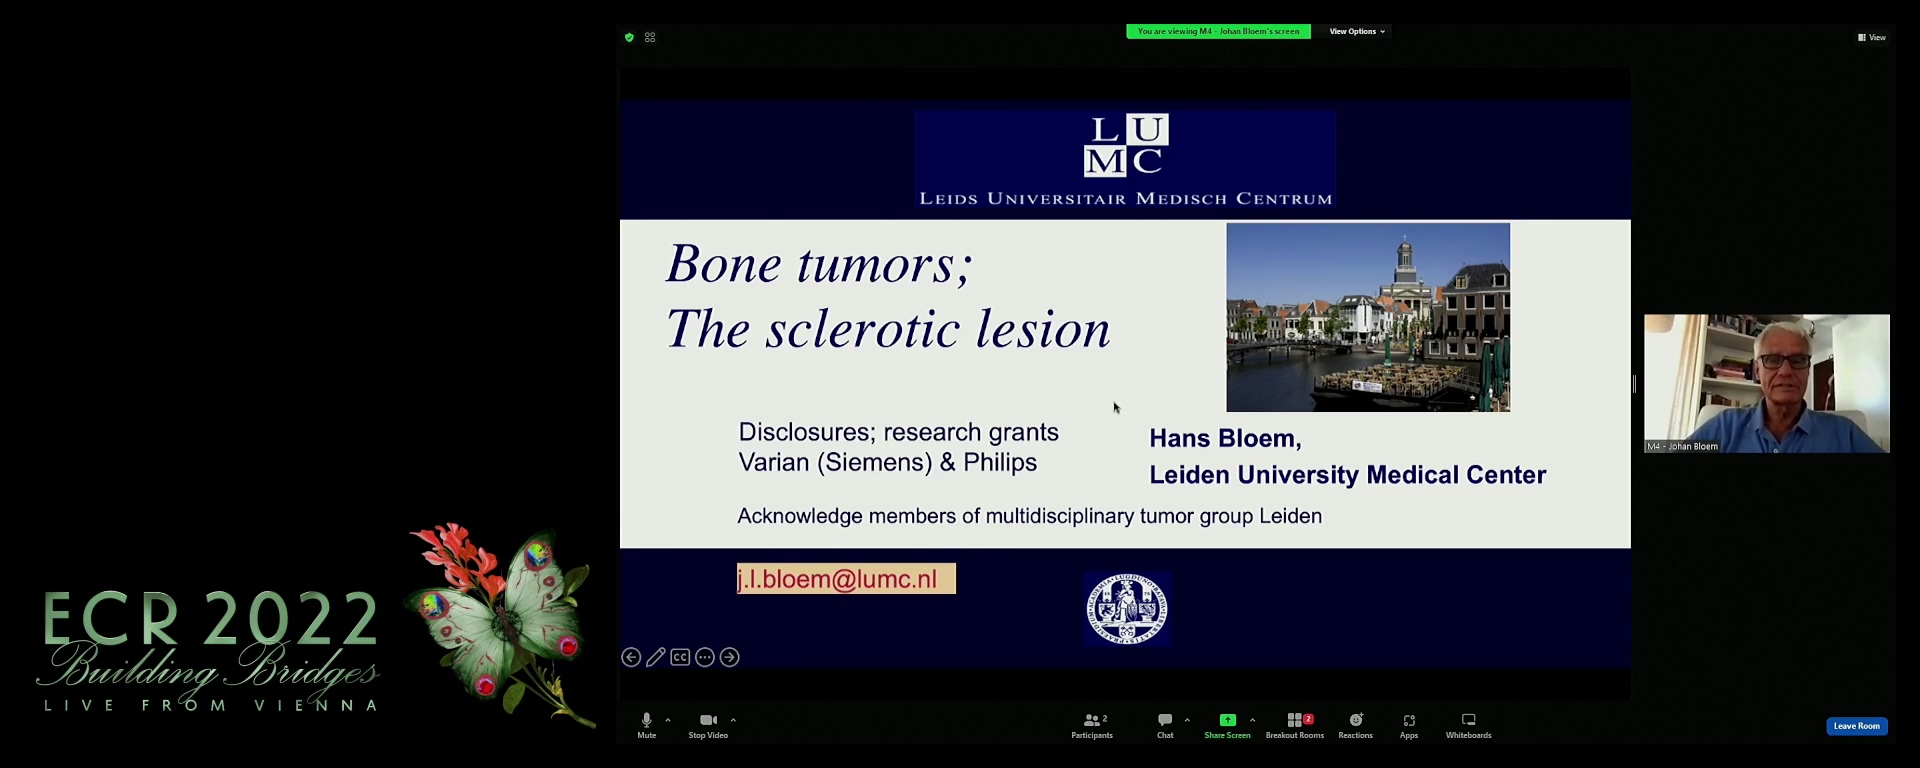 The sclerotic lesion - Johan L. Bloem, Leiden / NL